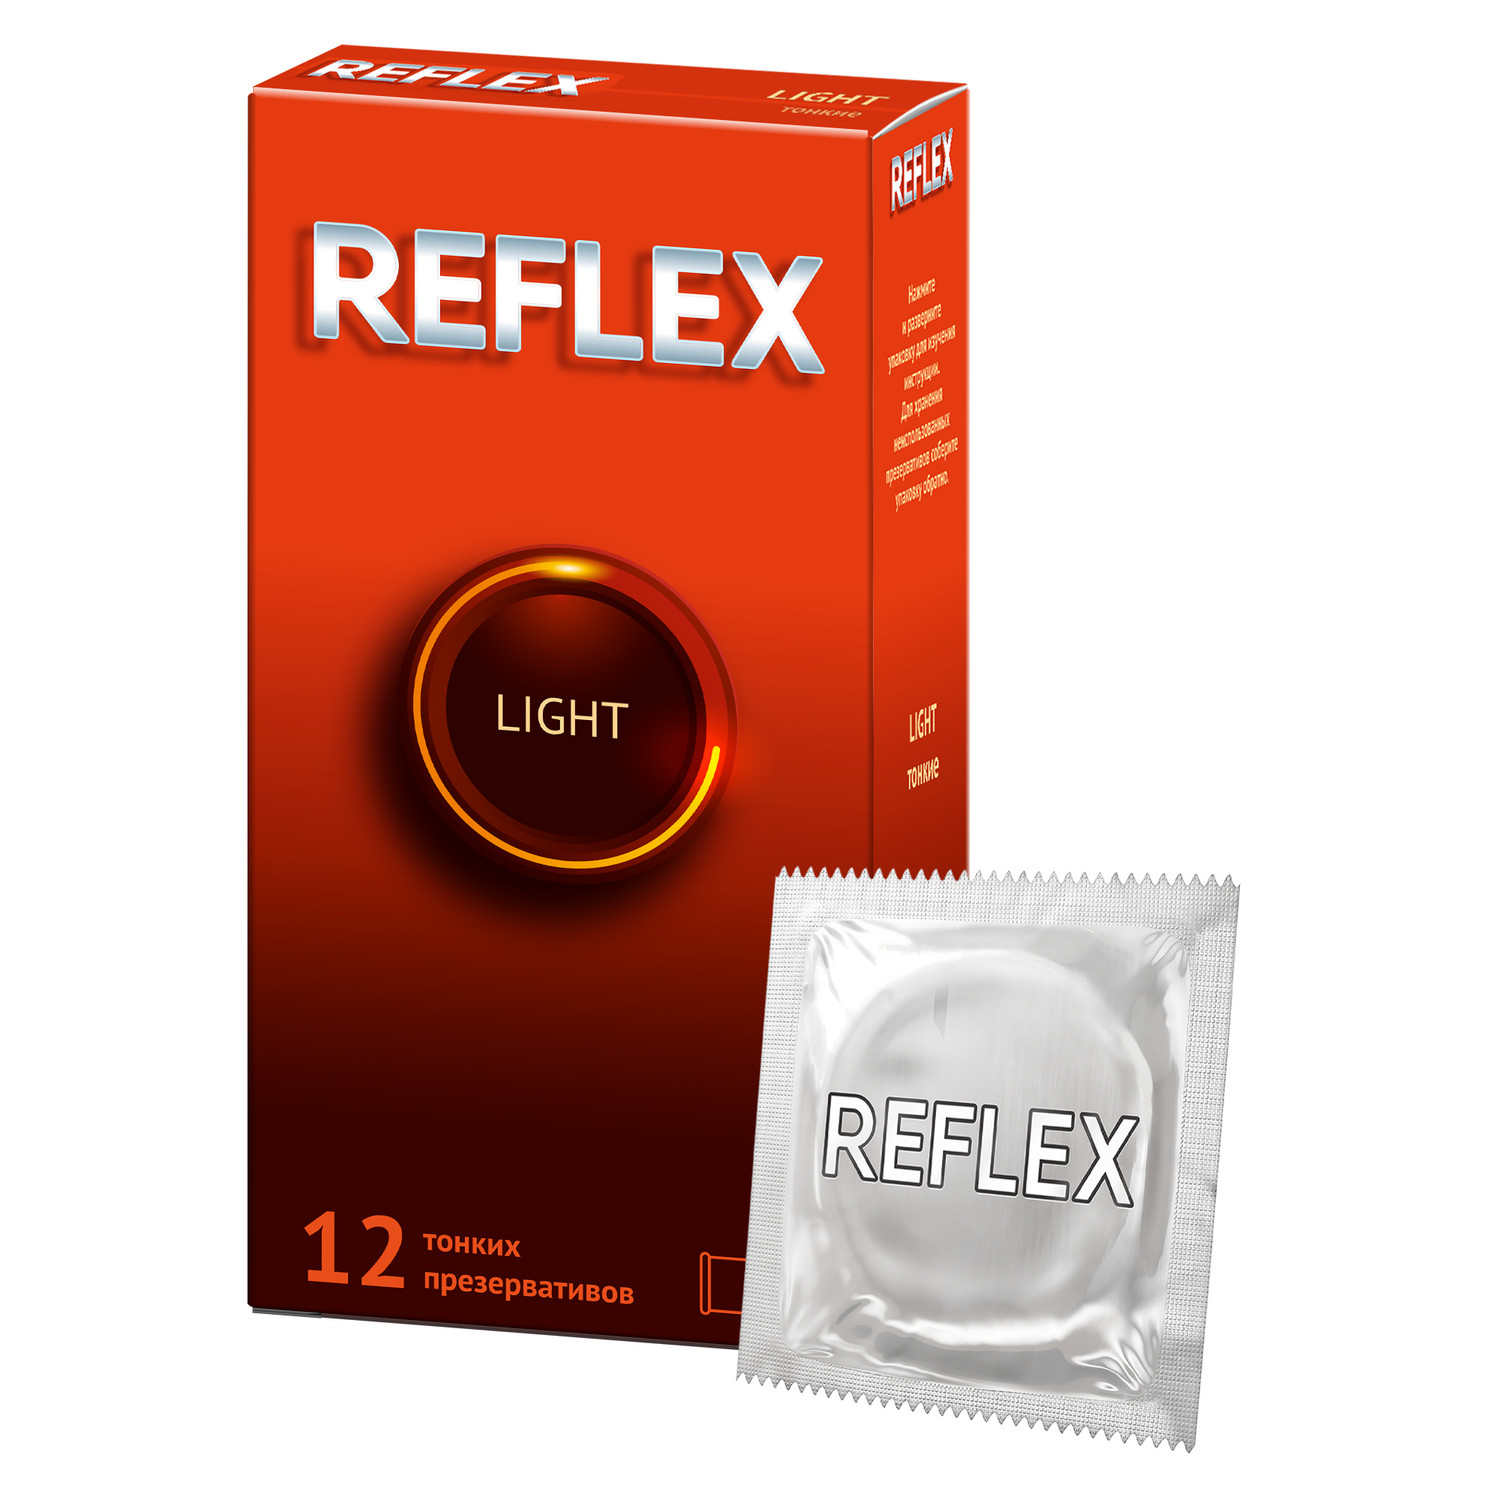 Reflex Light презервативы в смазке, 12 шт.